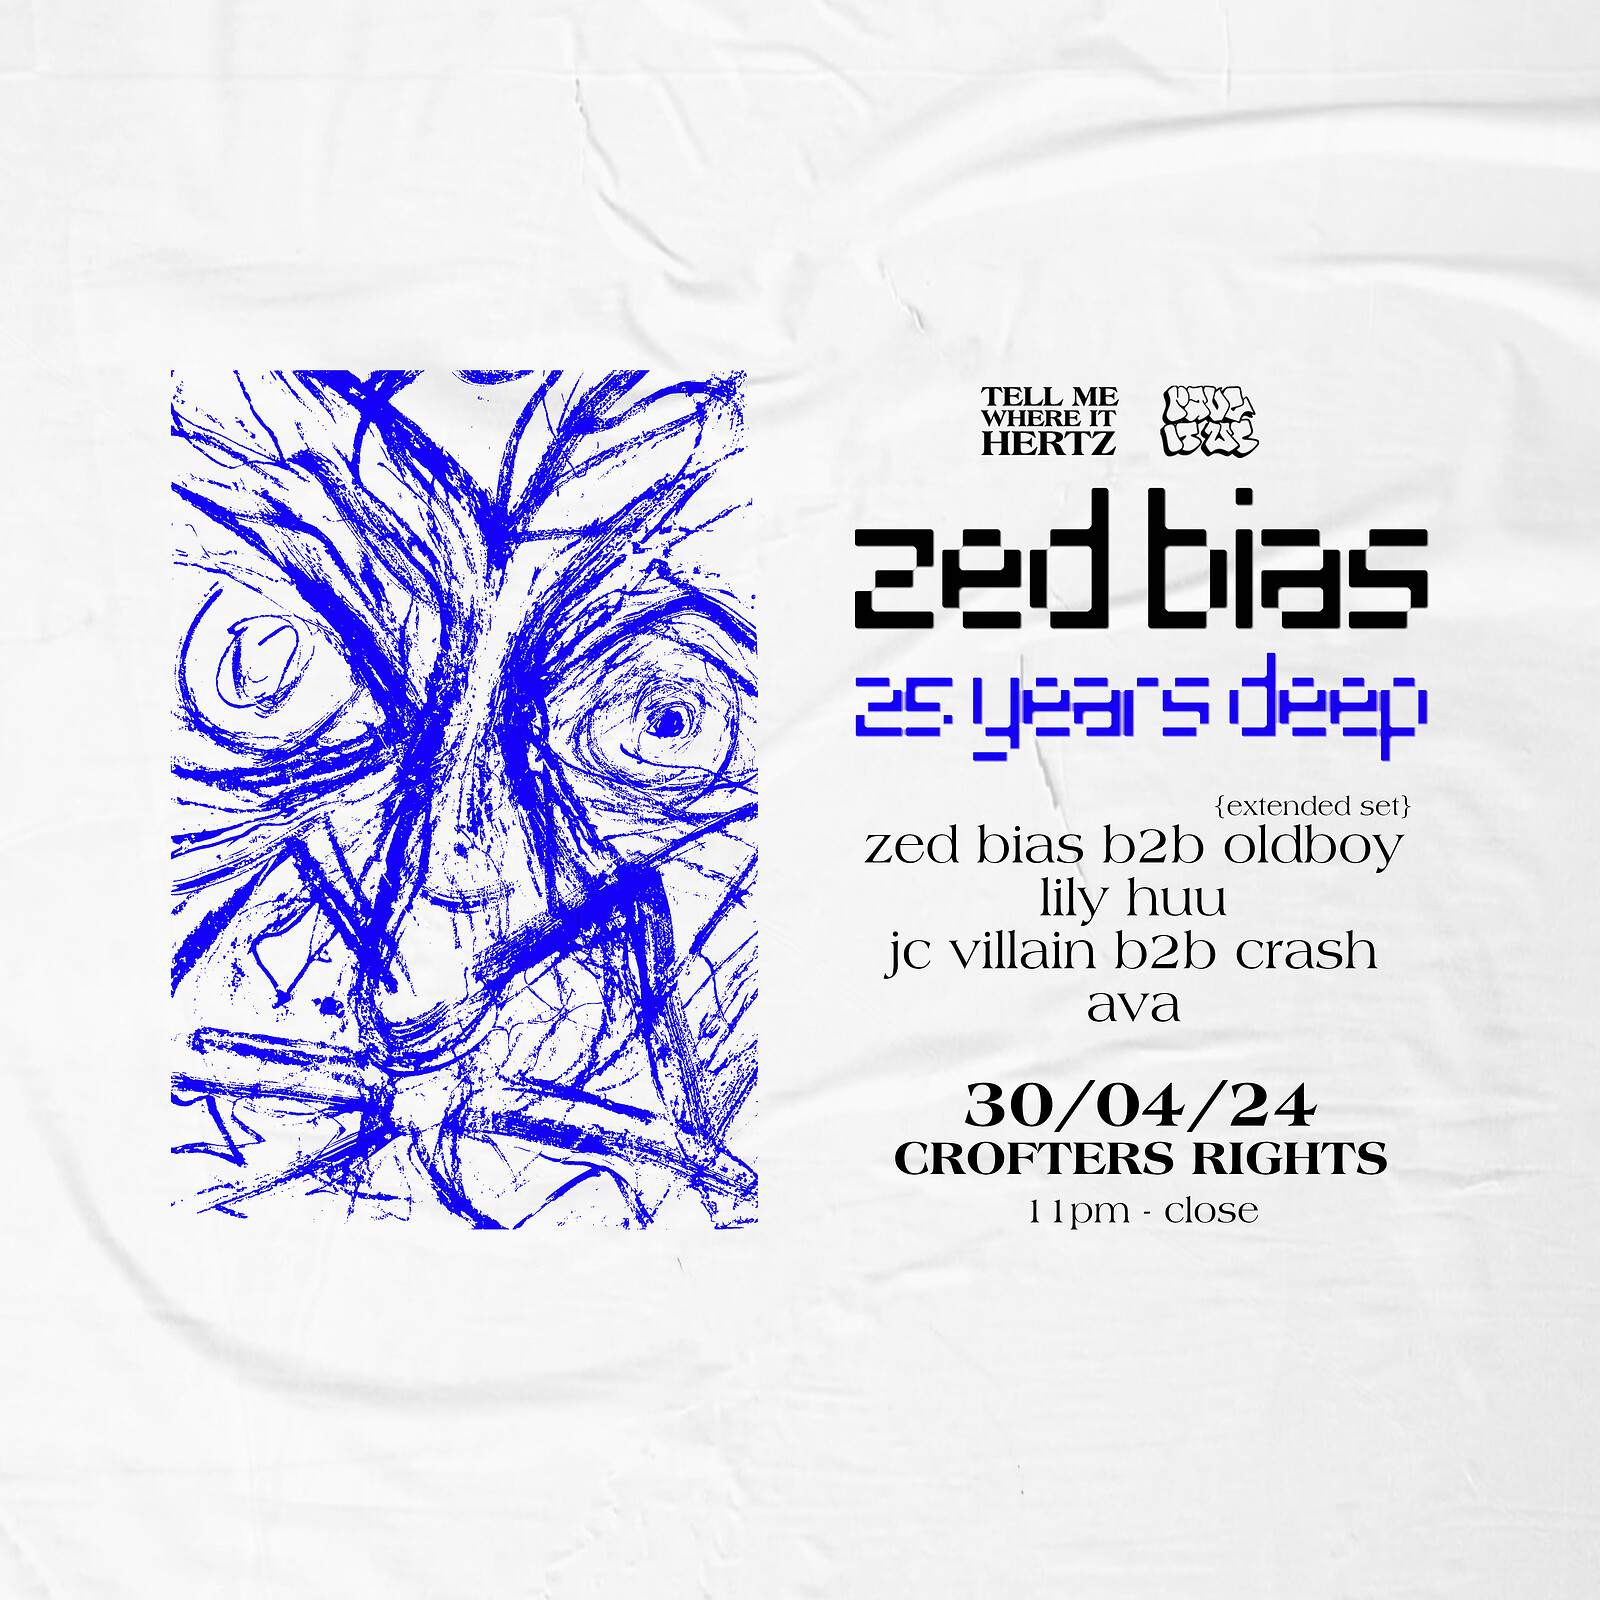 ZED BIAS 25 YEARS DEEP: ZED BIAS B2B OLDBOY - フライヤー表